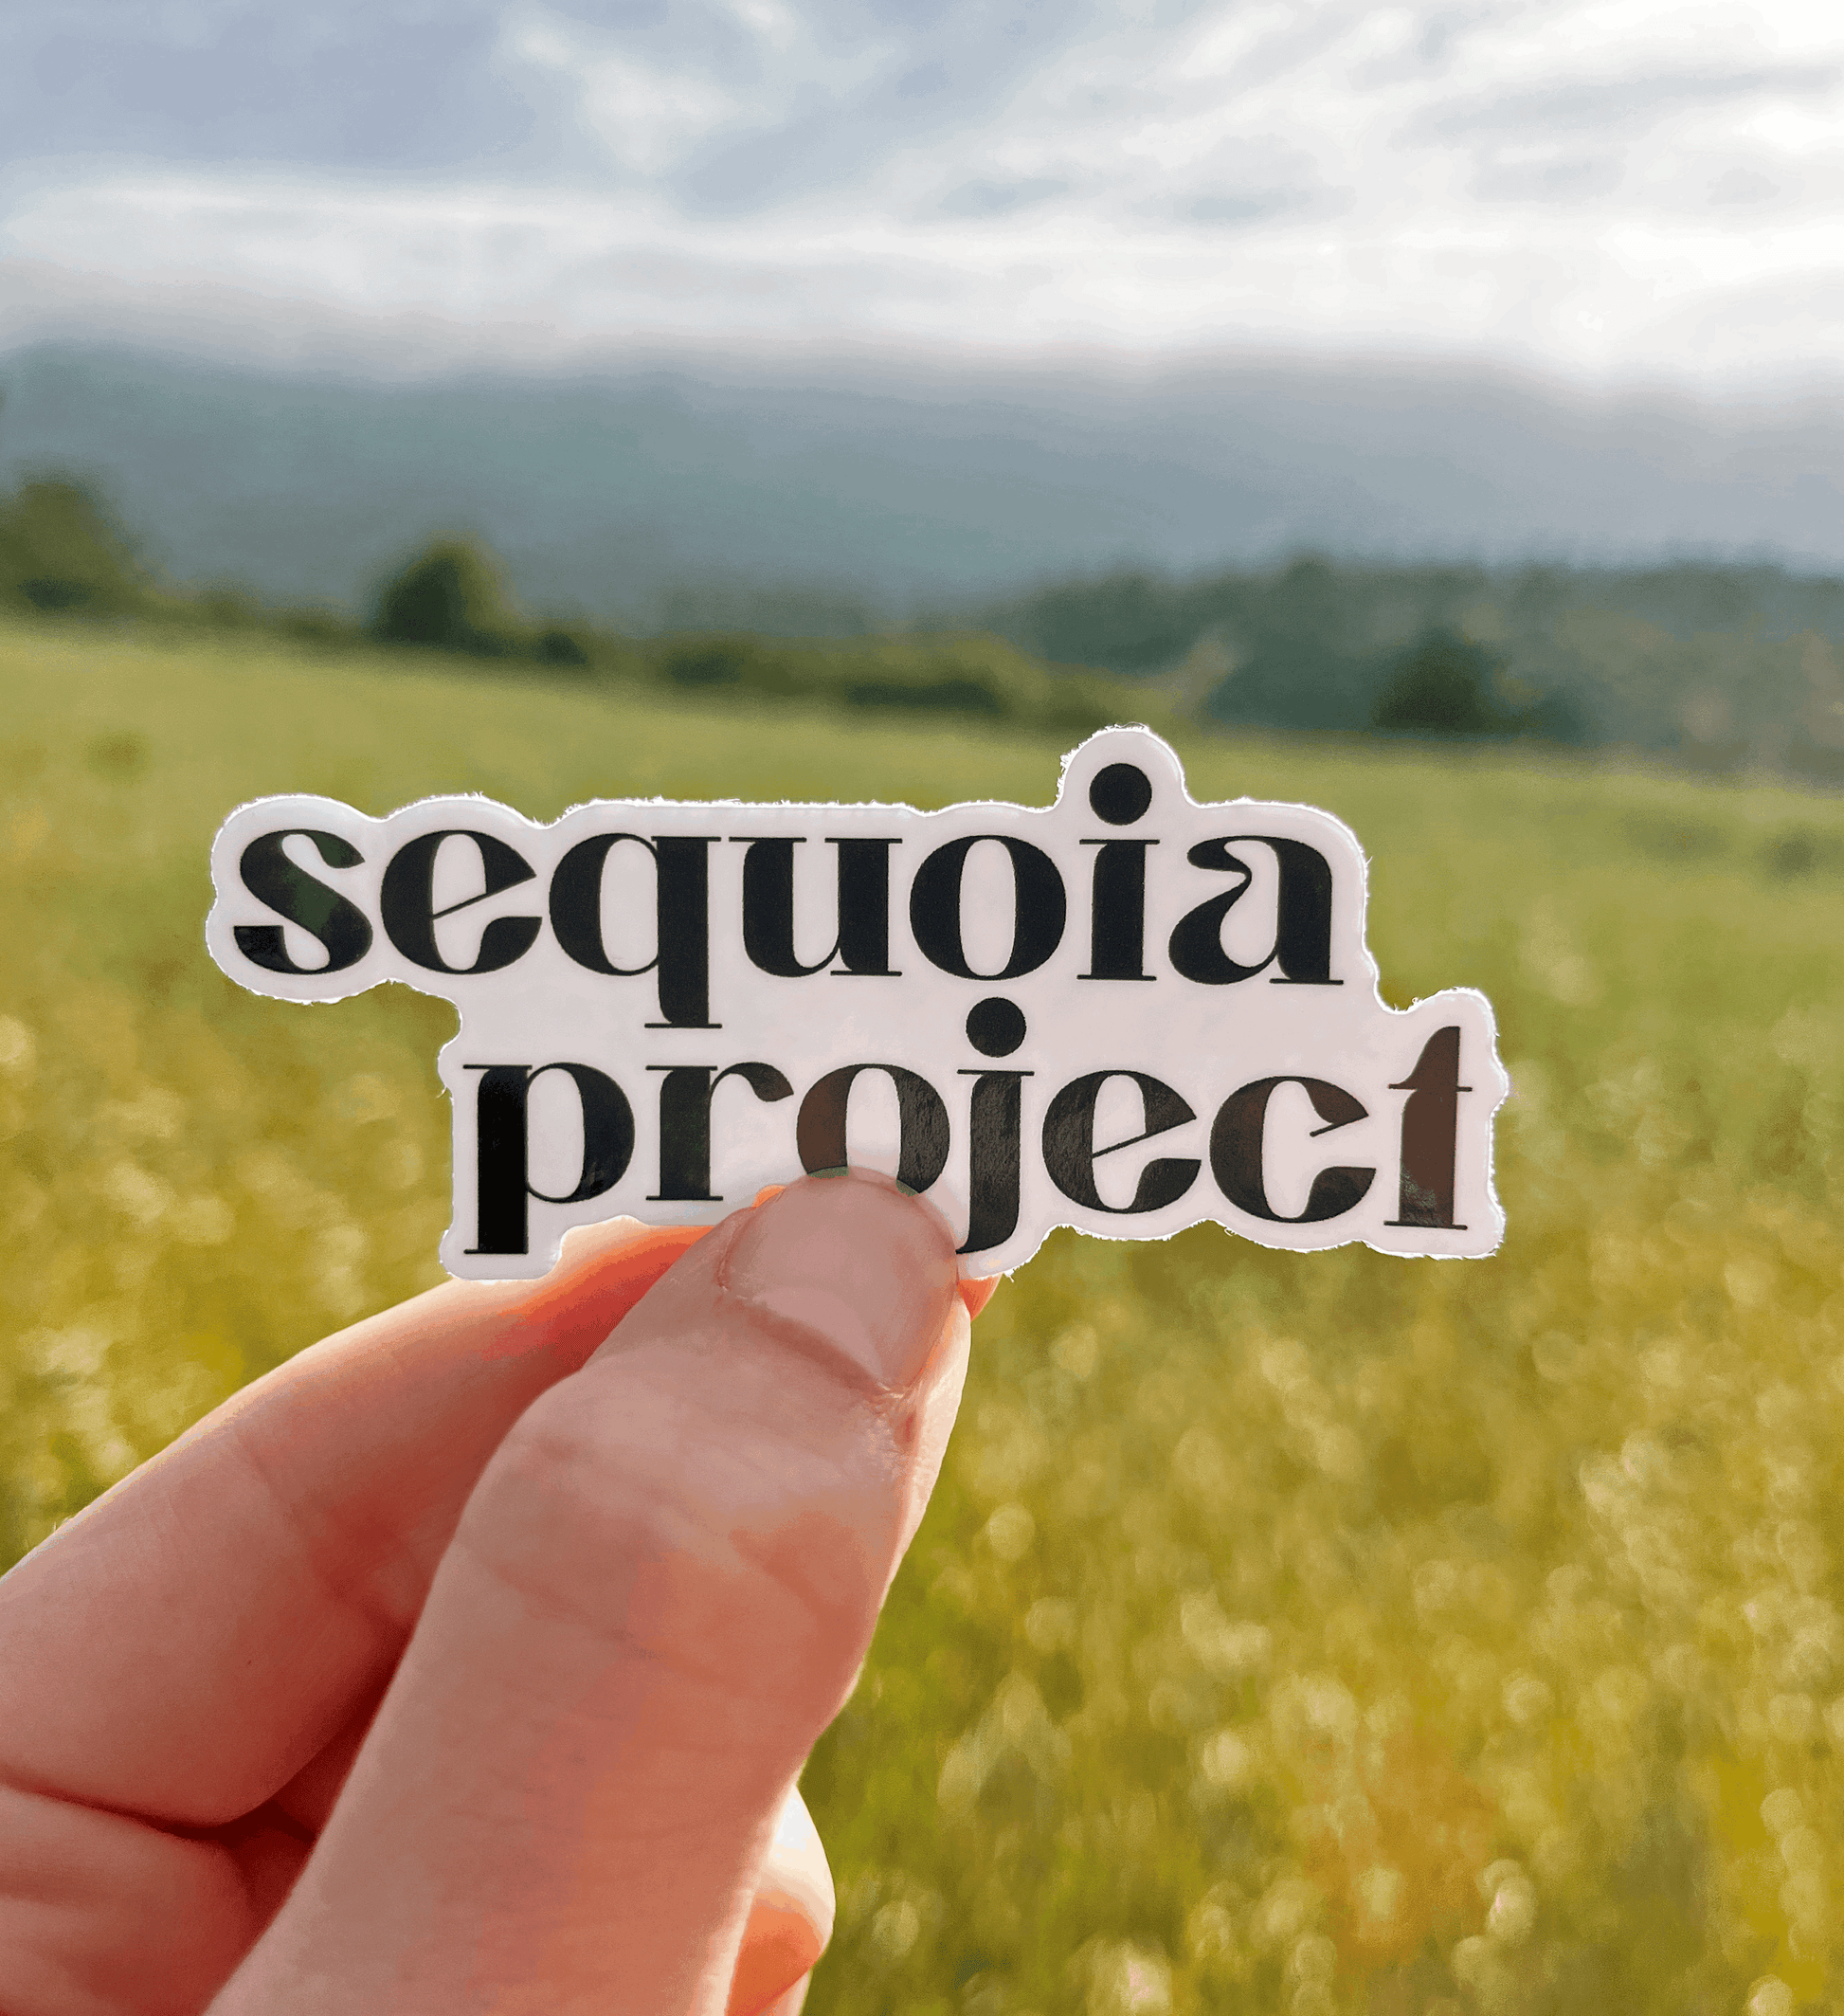 Sequoia Project Sticker